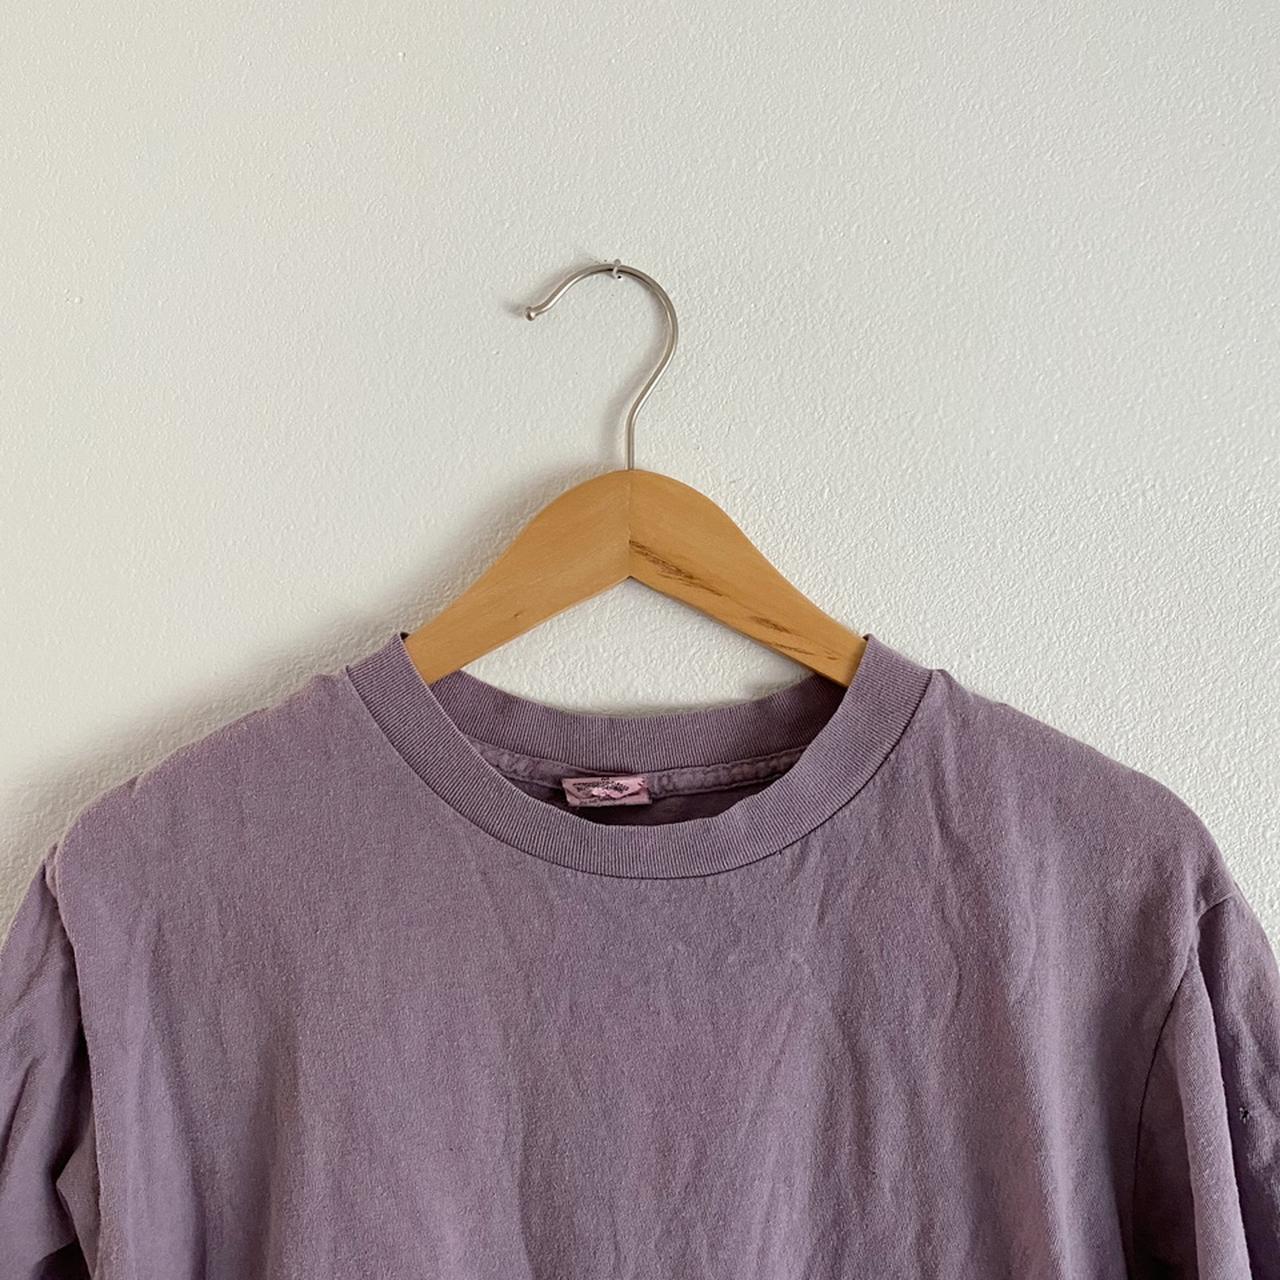 Product Image 3 - Over dyed purple basic tee